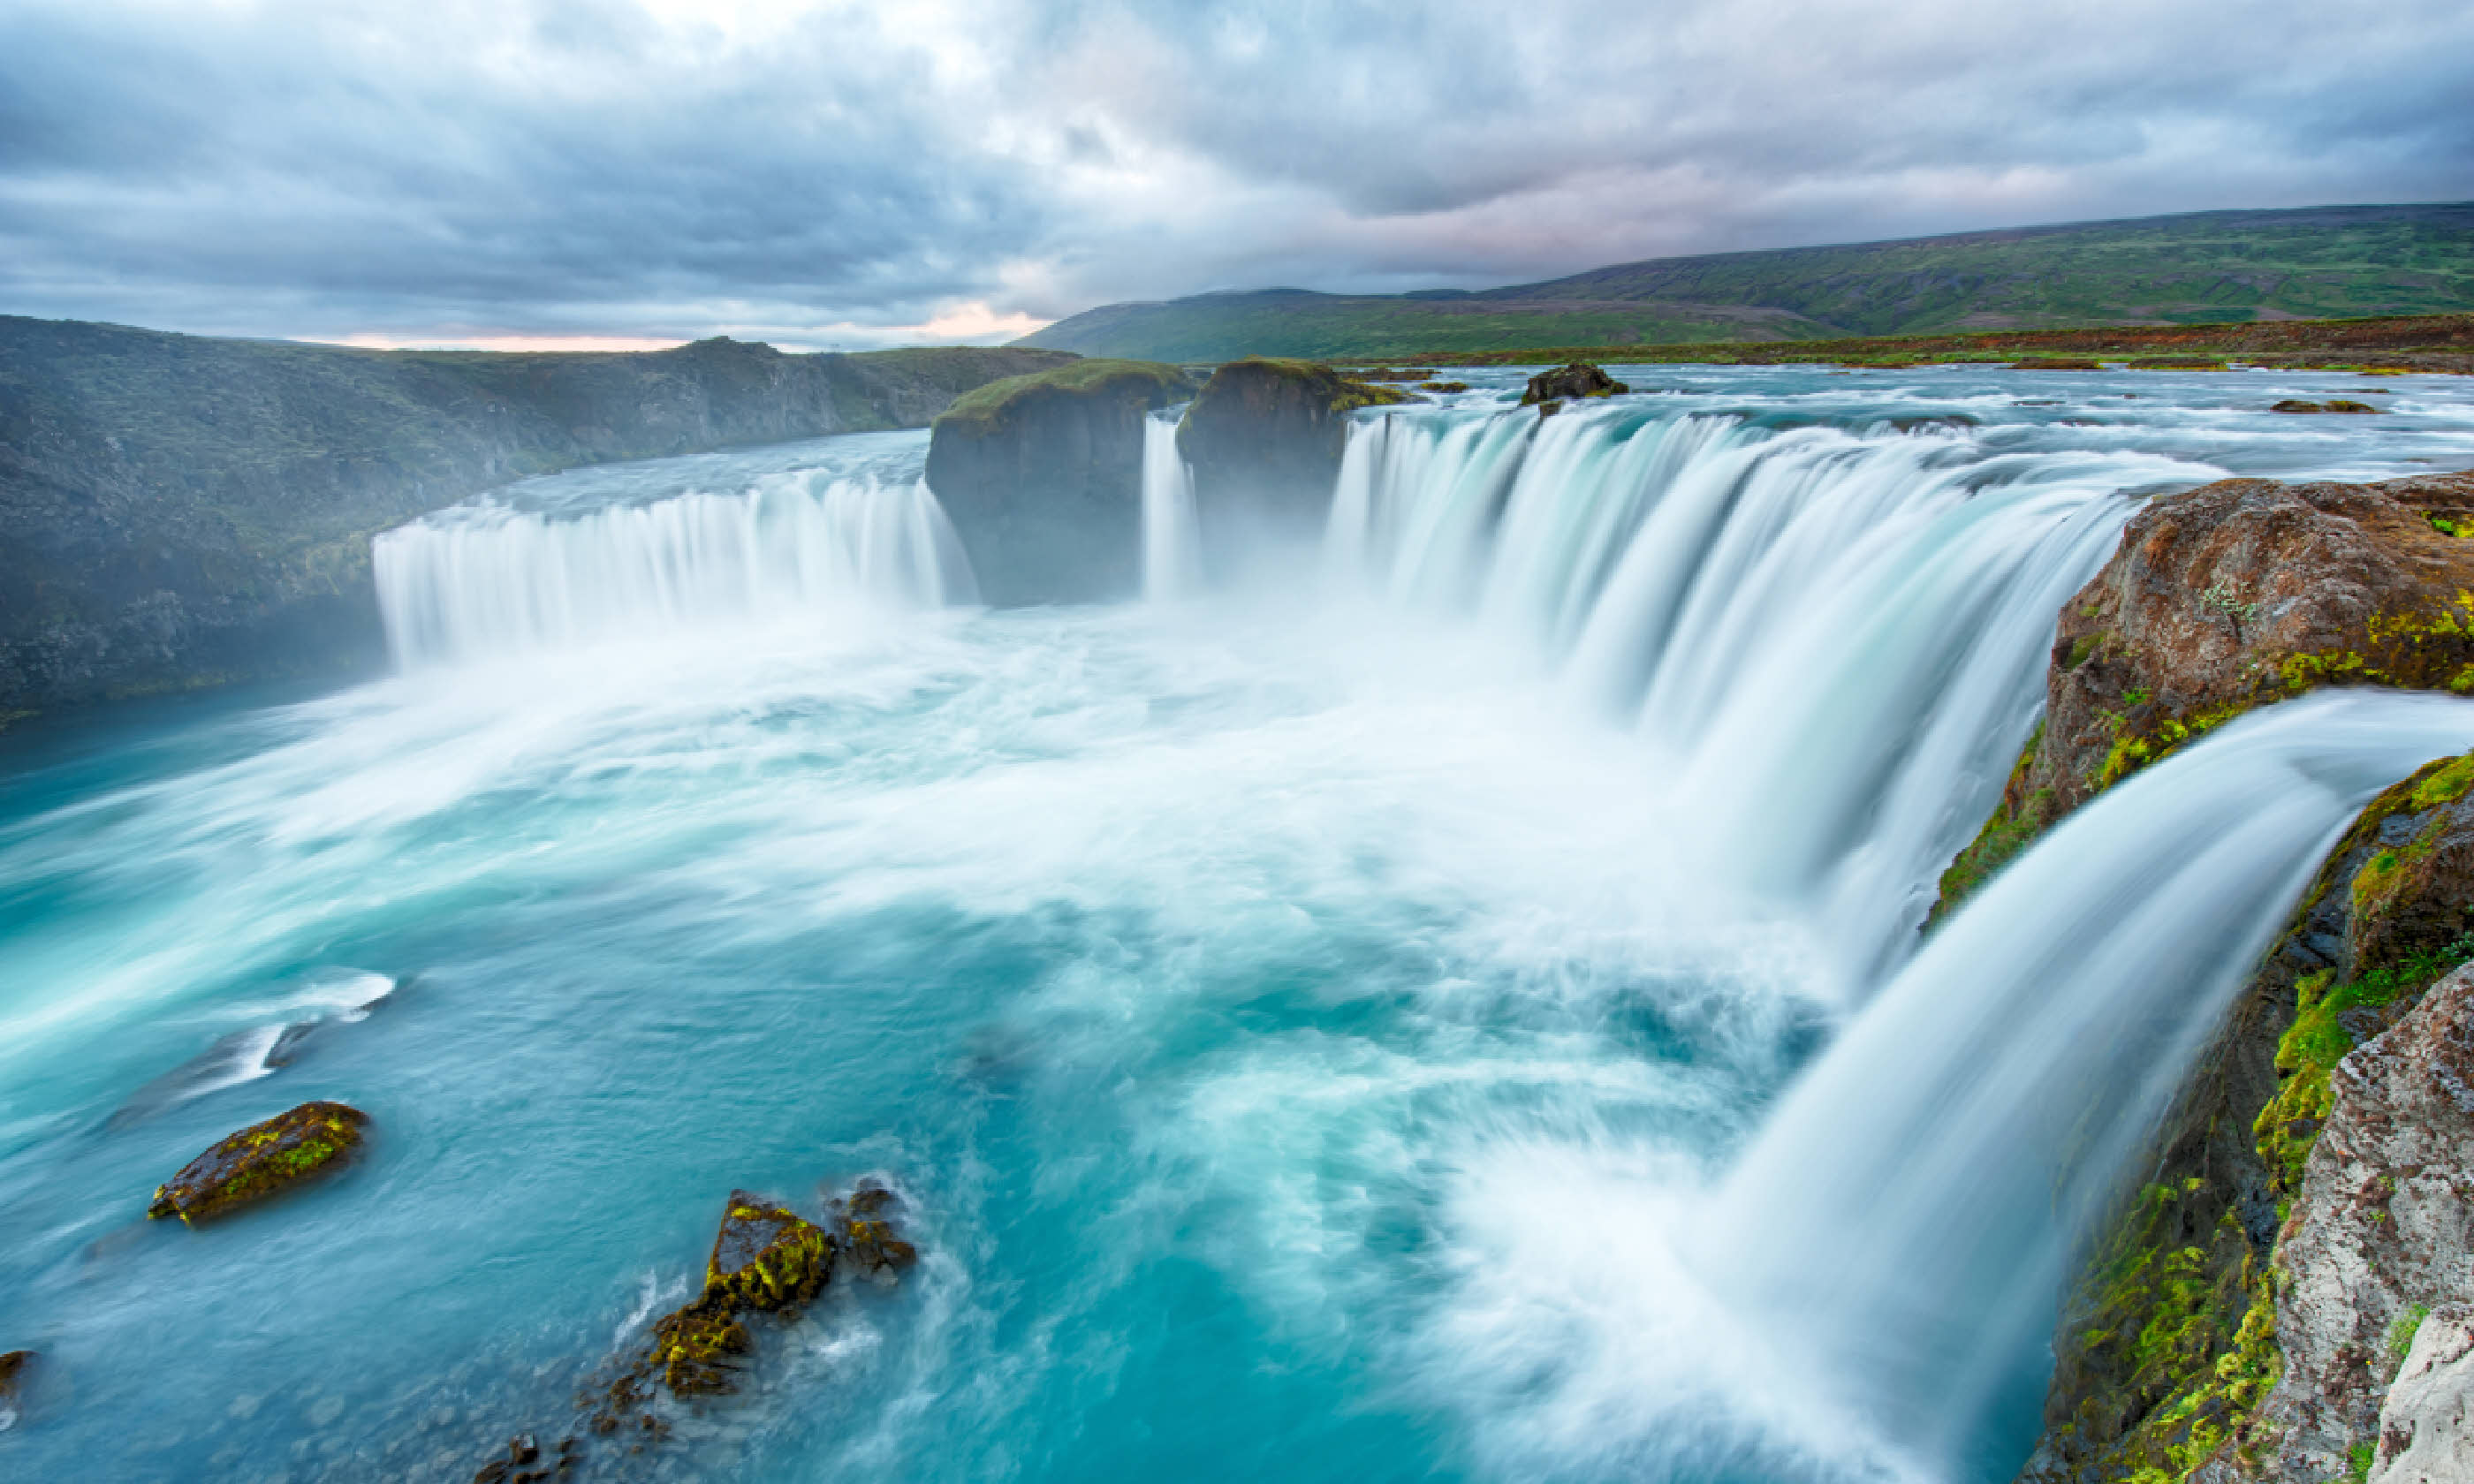 Godafoss waterfall, Iceland (Shutterstock: see credit below)